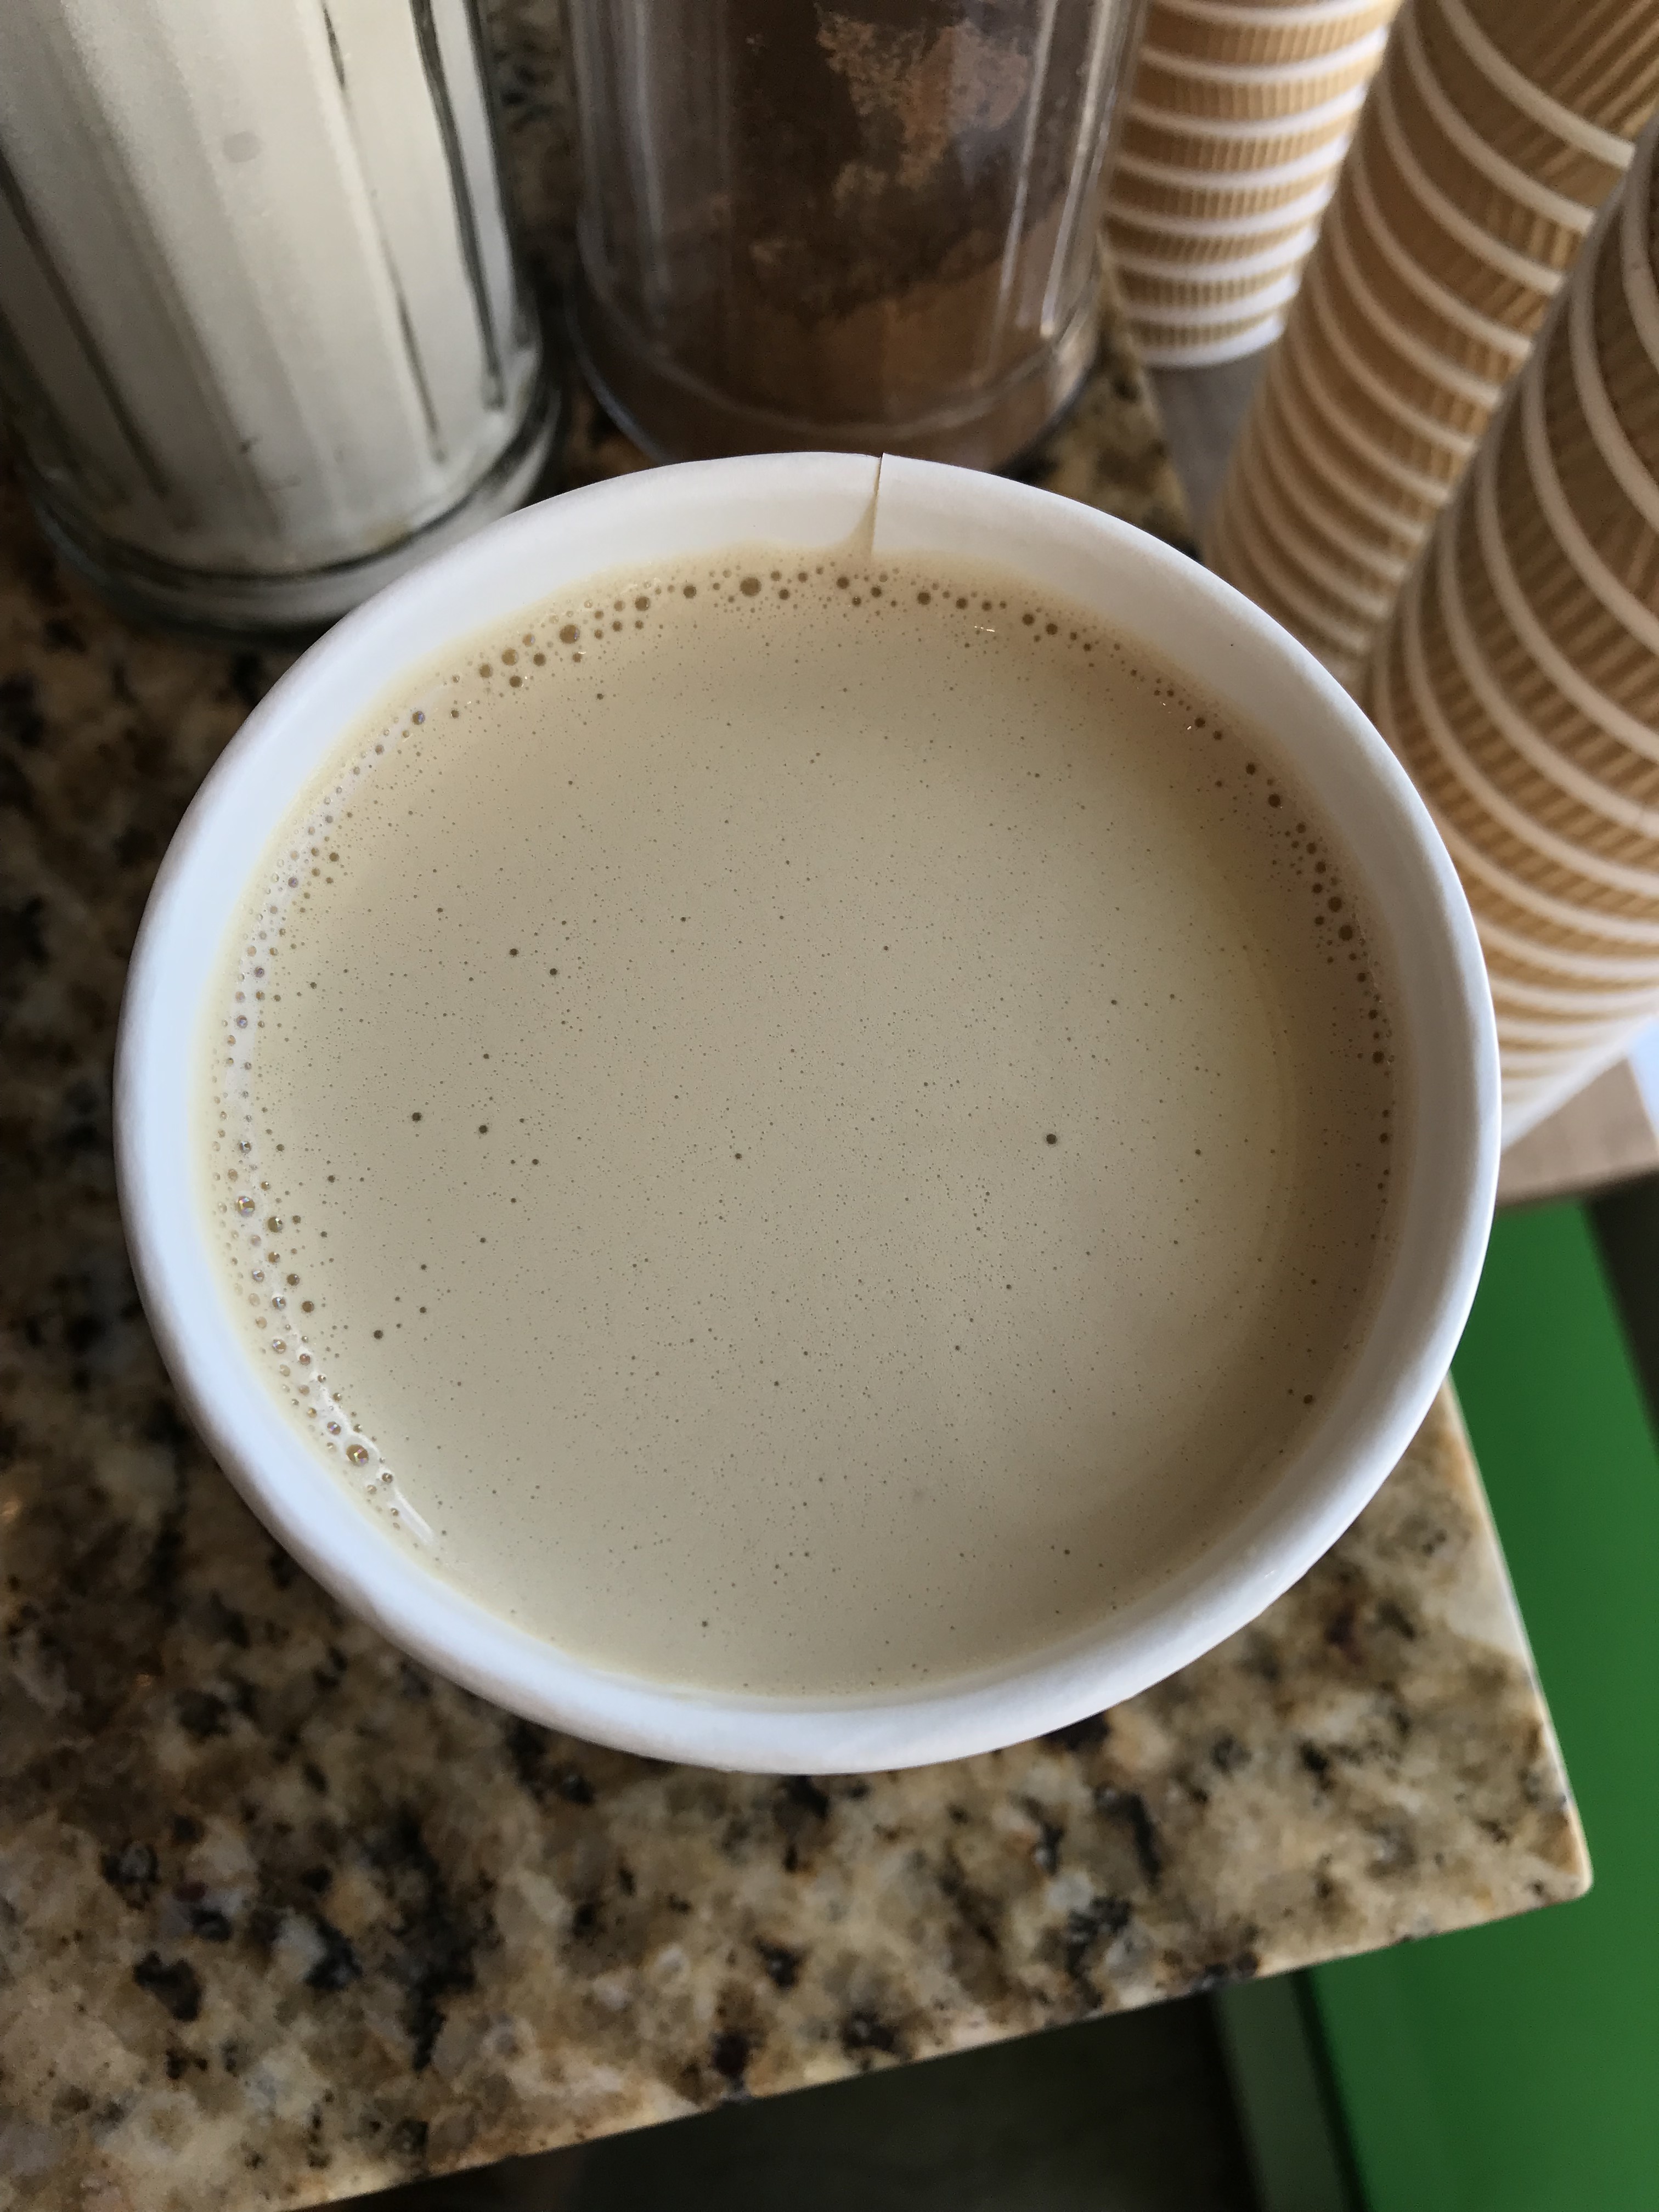 …and "[Sherpa Coffee](http://coffeeshop-san-francisco.sites.tablehero.com/)"